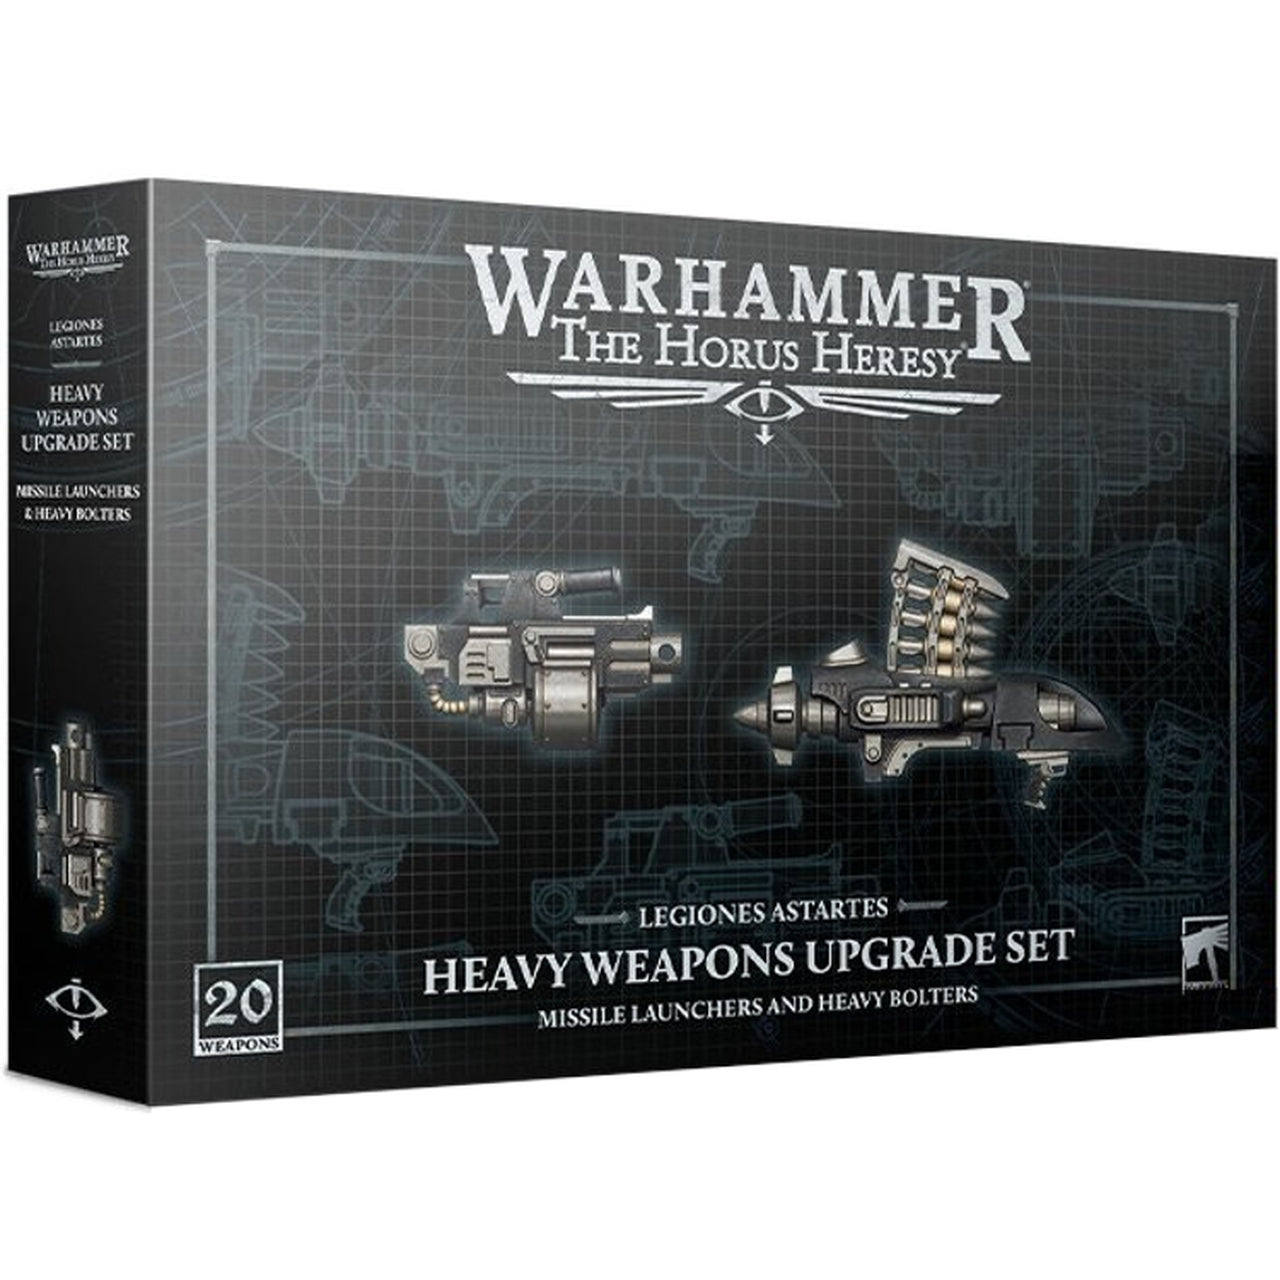 Warhammer: The Horus Heresy - Legiones Astartes: Heavy Weapons Upgrade Set